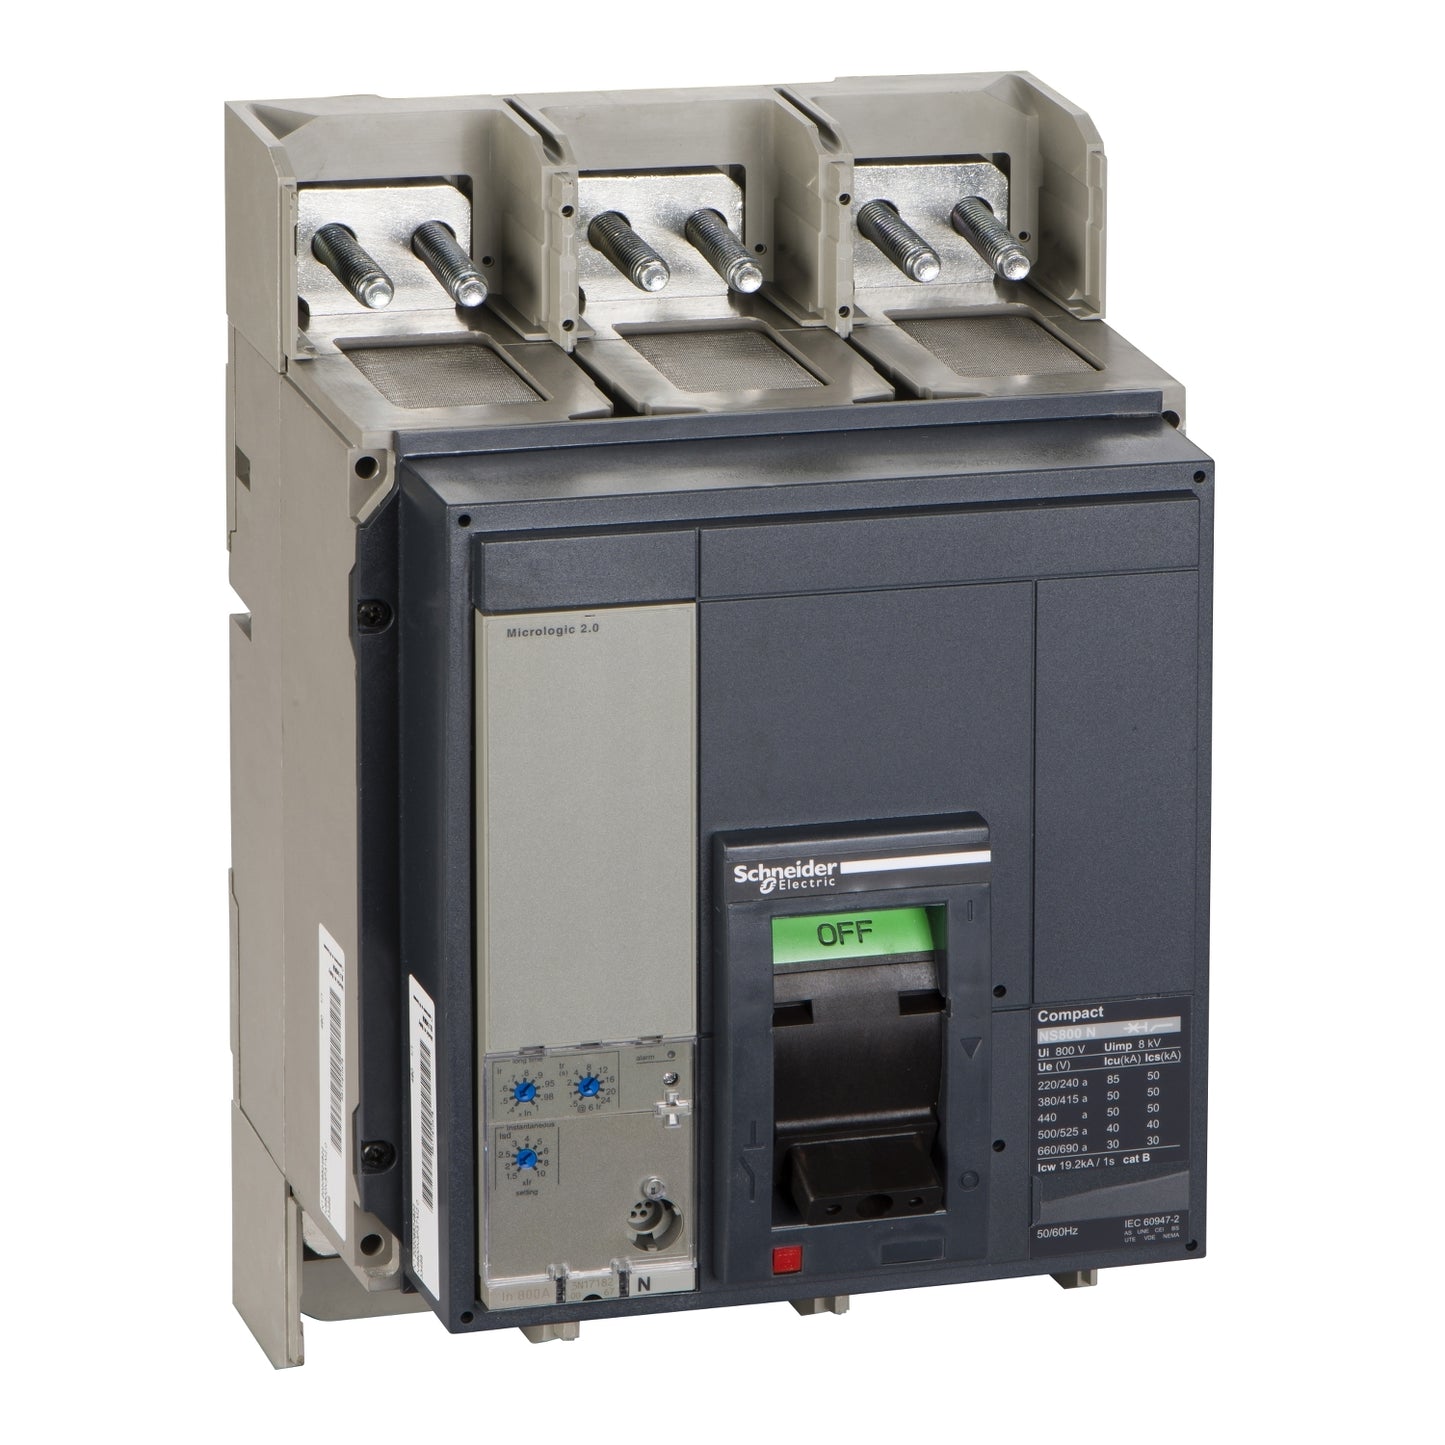 Compact NS - NS800N - Micrologic 2.0 - 800A - 50kA 380/415VAC (IEC60947-2) - 33466 - SCHNEIDER